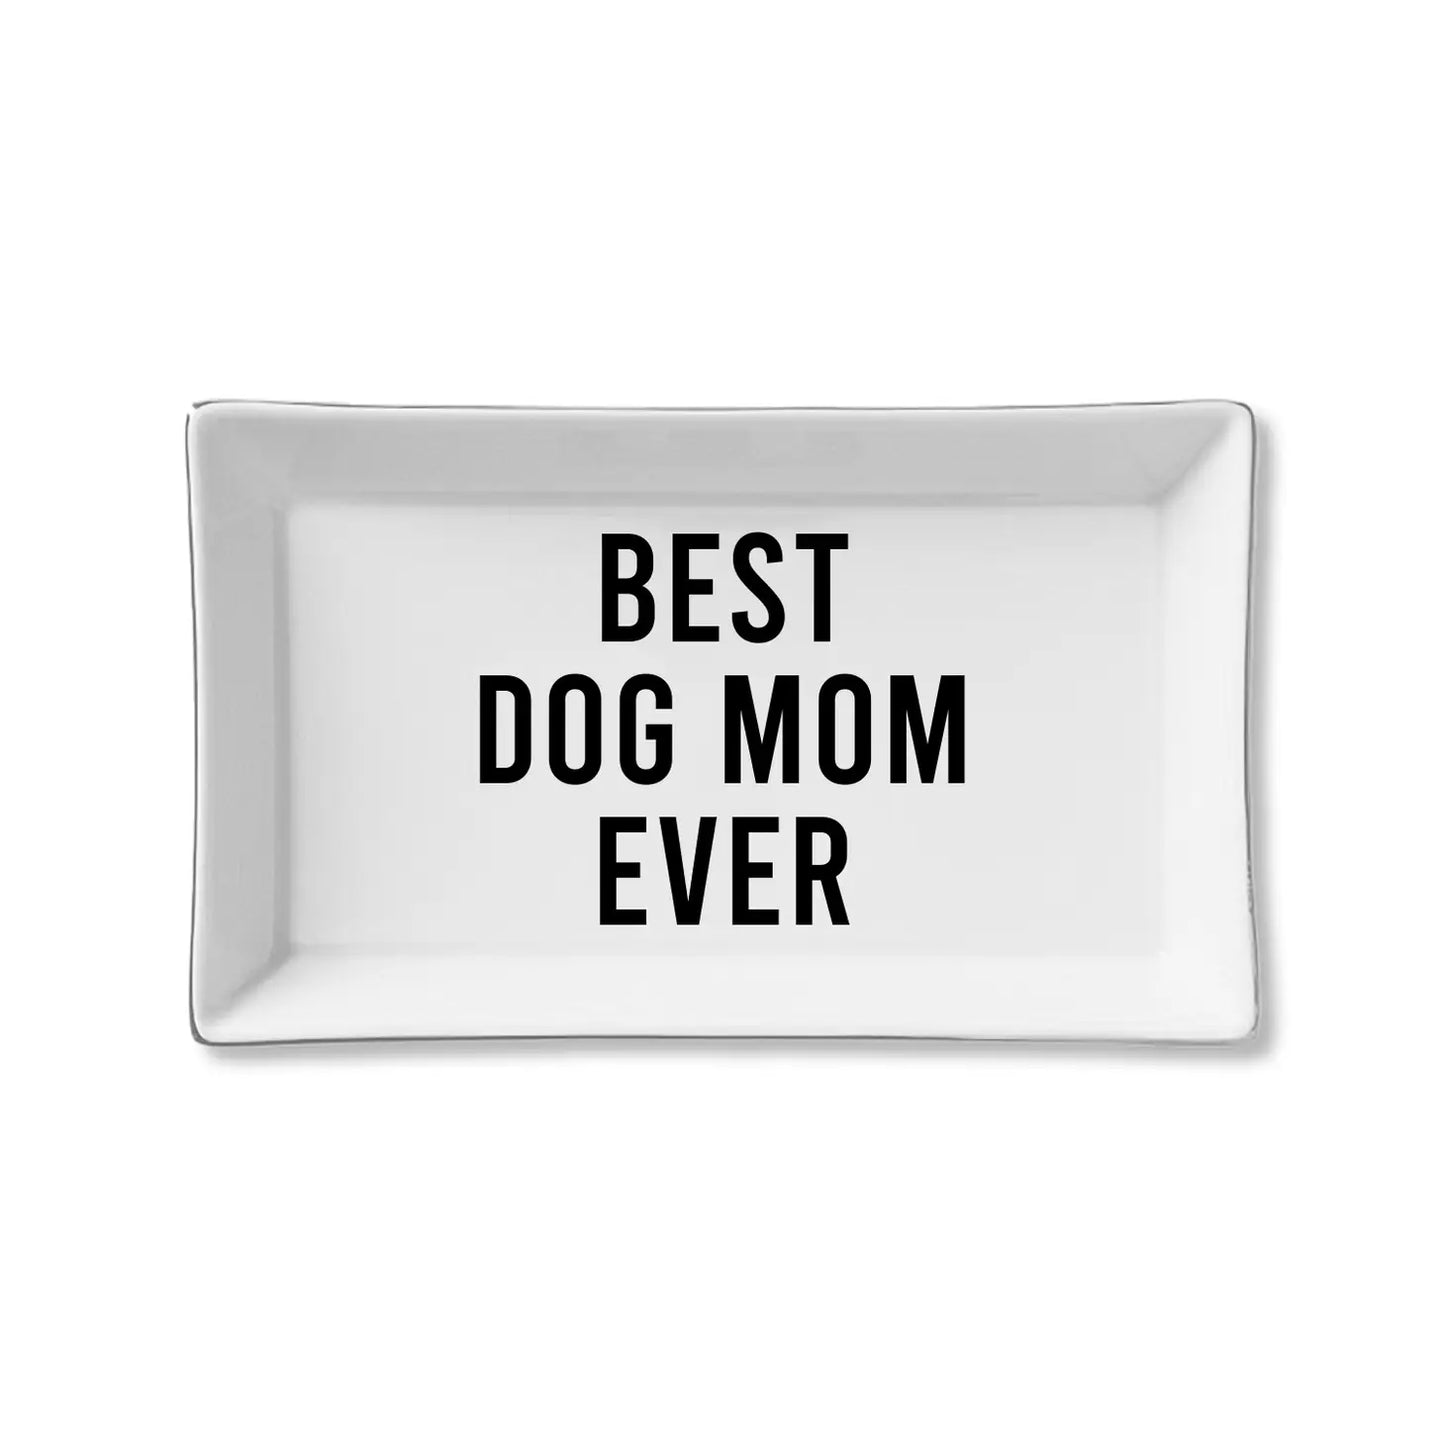 Best Dog Mom Ever Tray